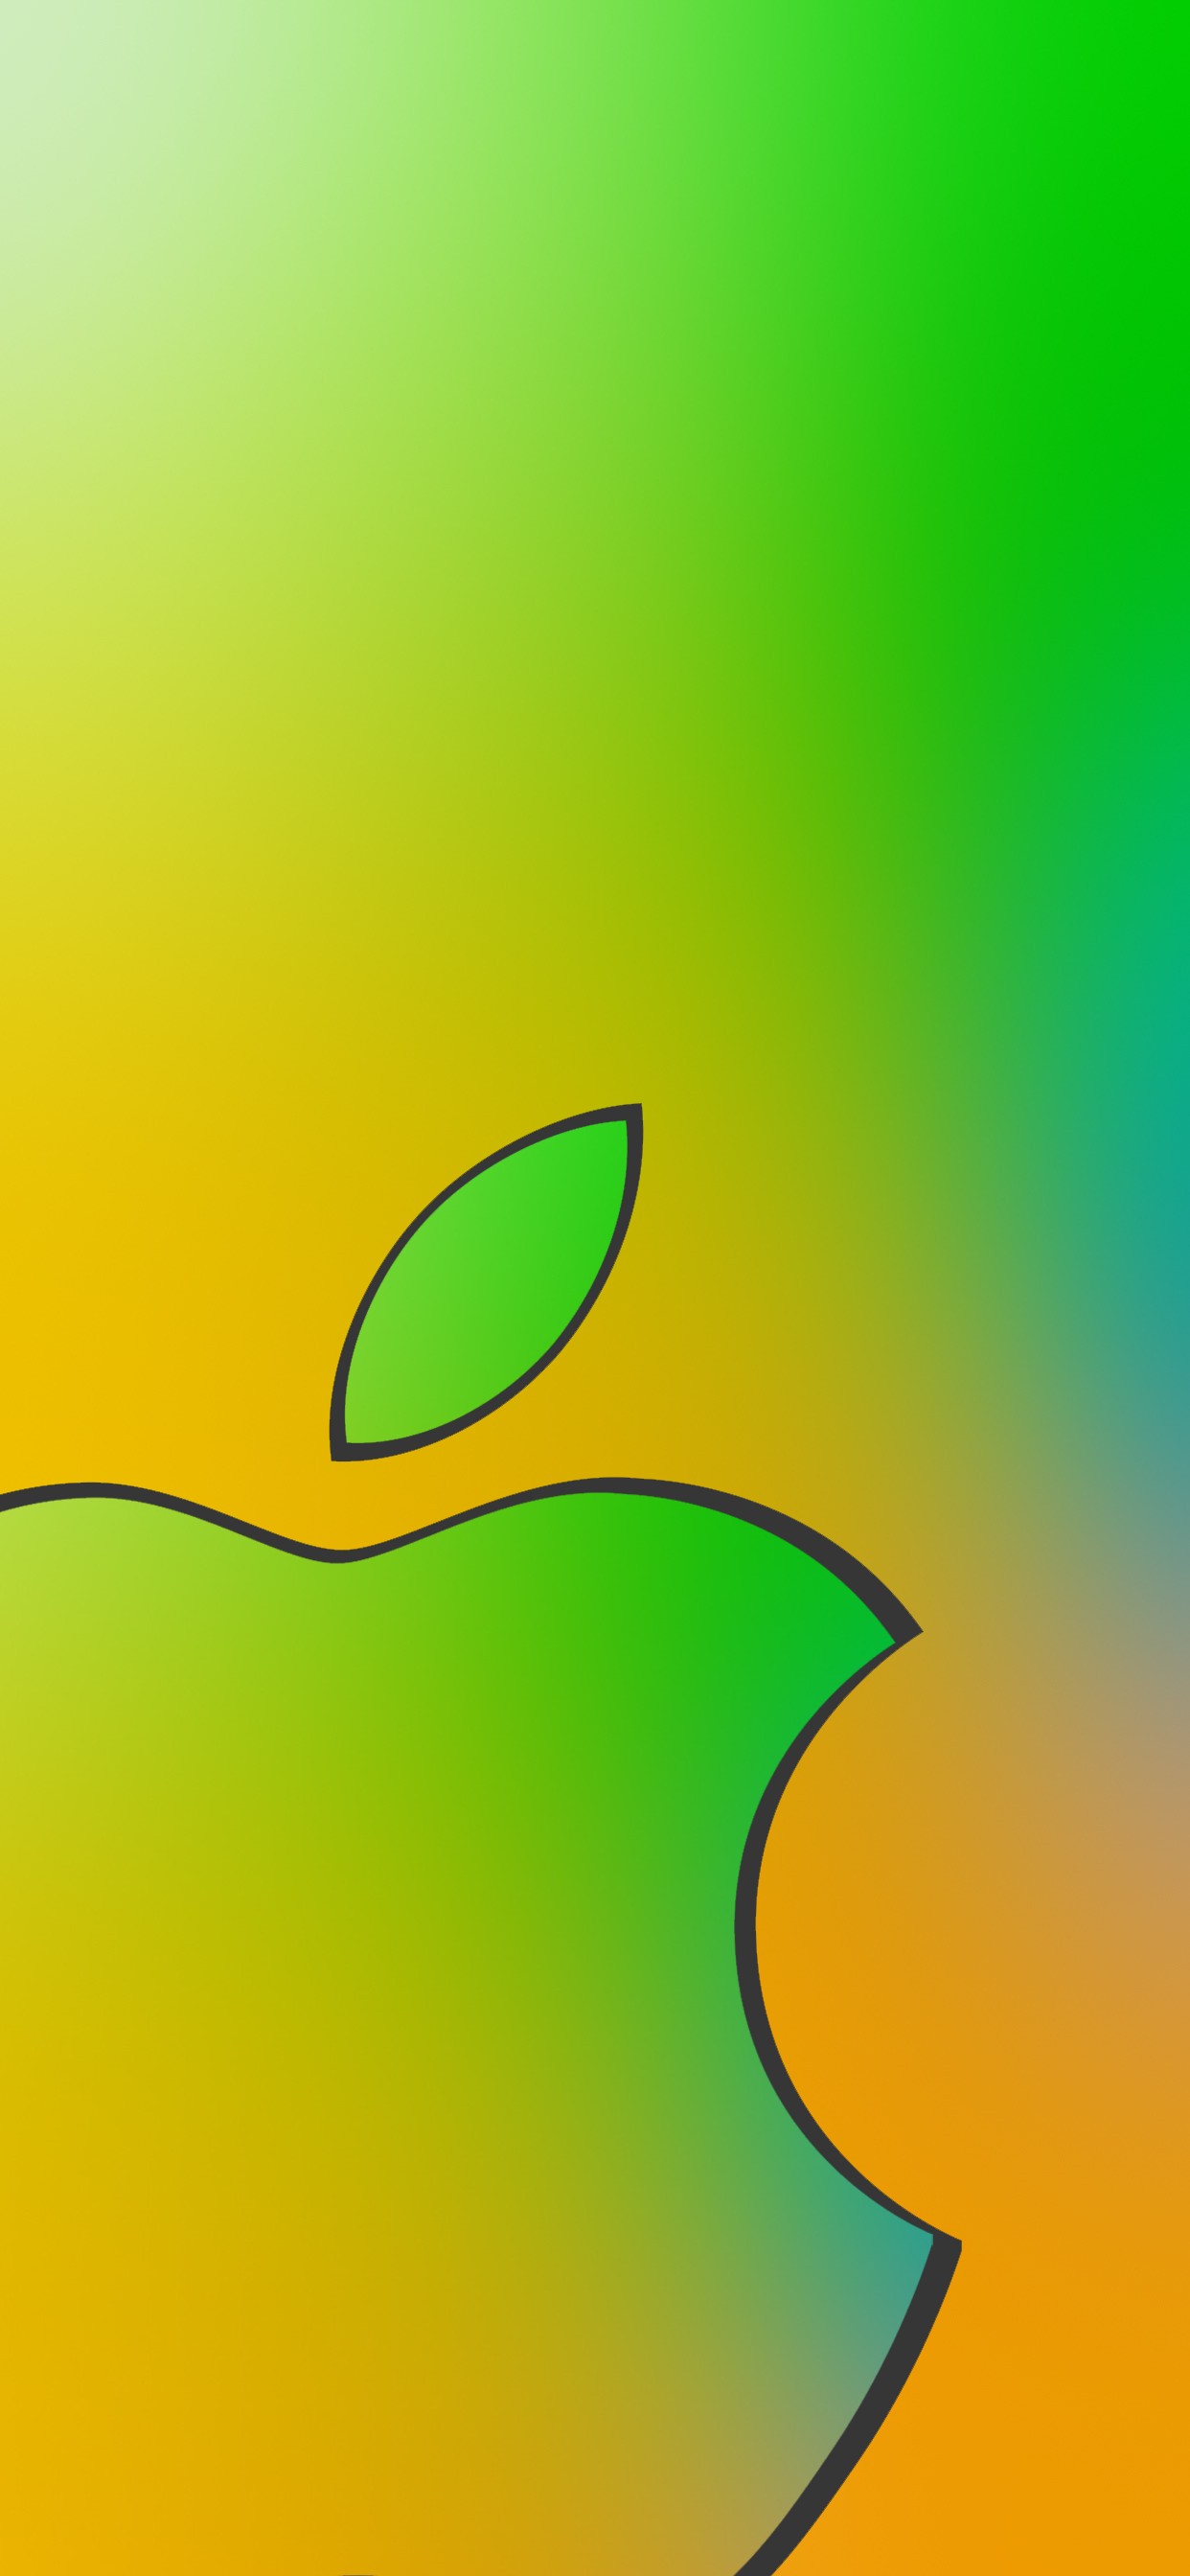 Apple Card Wallpaper 09 - Green Hd Apple Iphone - HD Wallpaper 